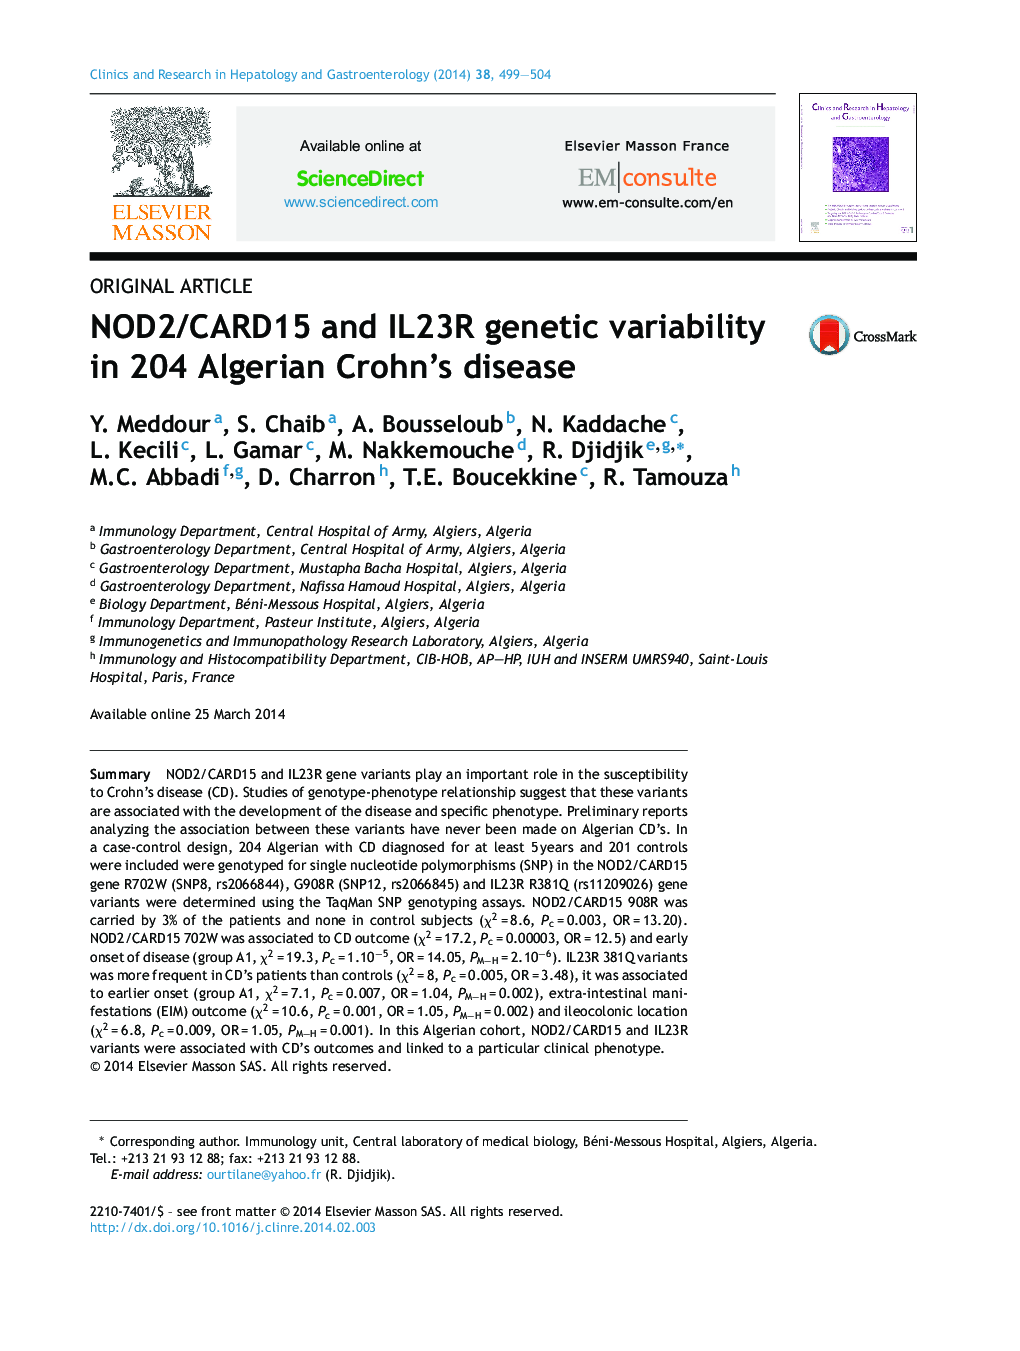 NOD2/CARD15 and IL23R genetic variability in 204 Algerian Crohn's disease